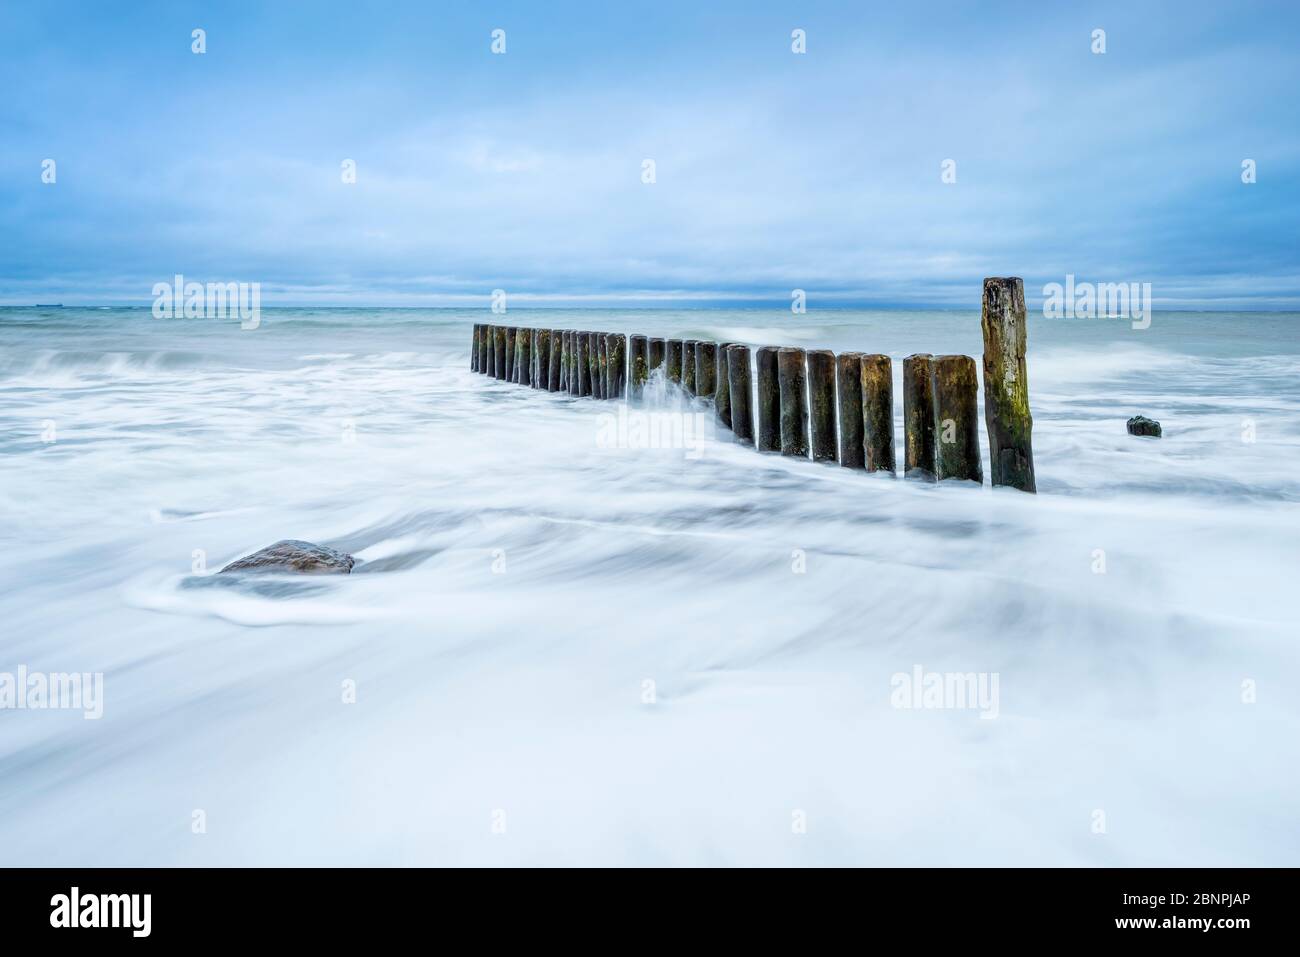 Groyne on the beach of the Baltic Sea, cloudy sky, stormy sea, near Rostock, Mecklenburg-West Pomerania, Germany Stock Photo